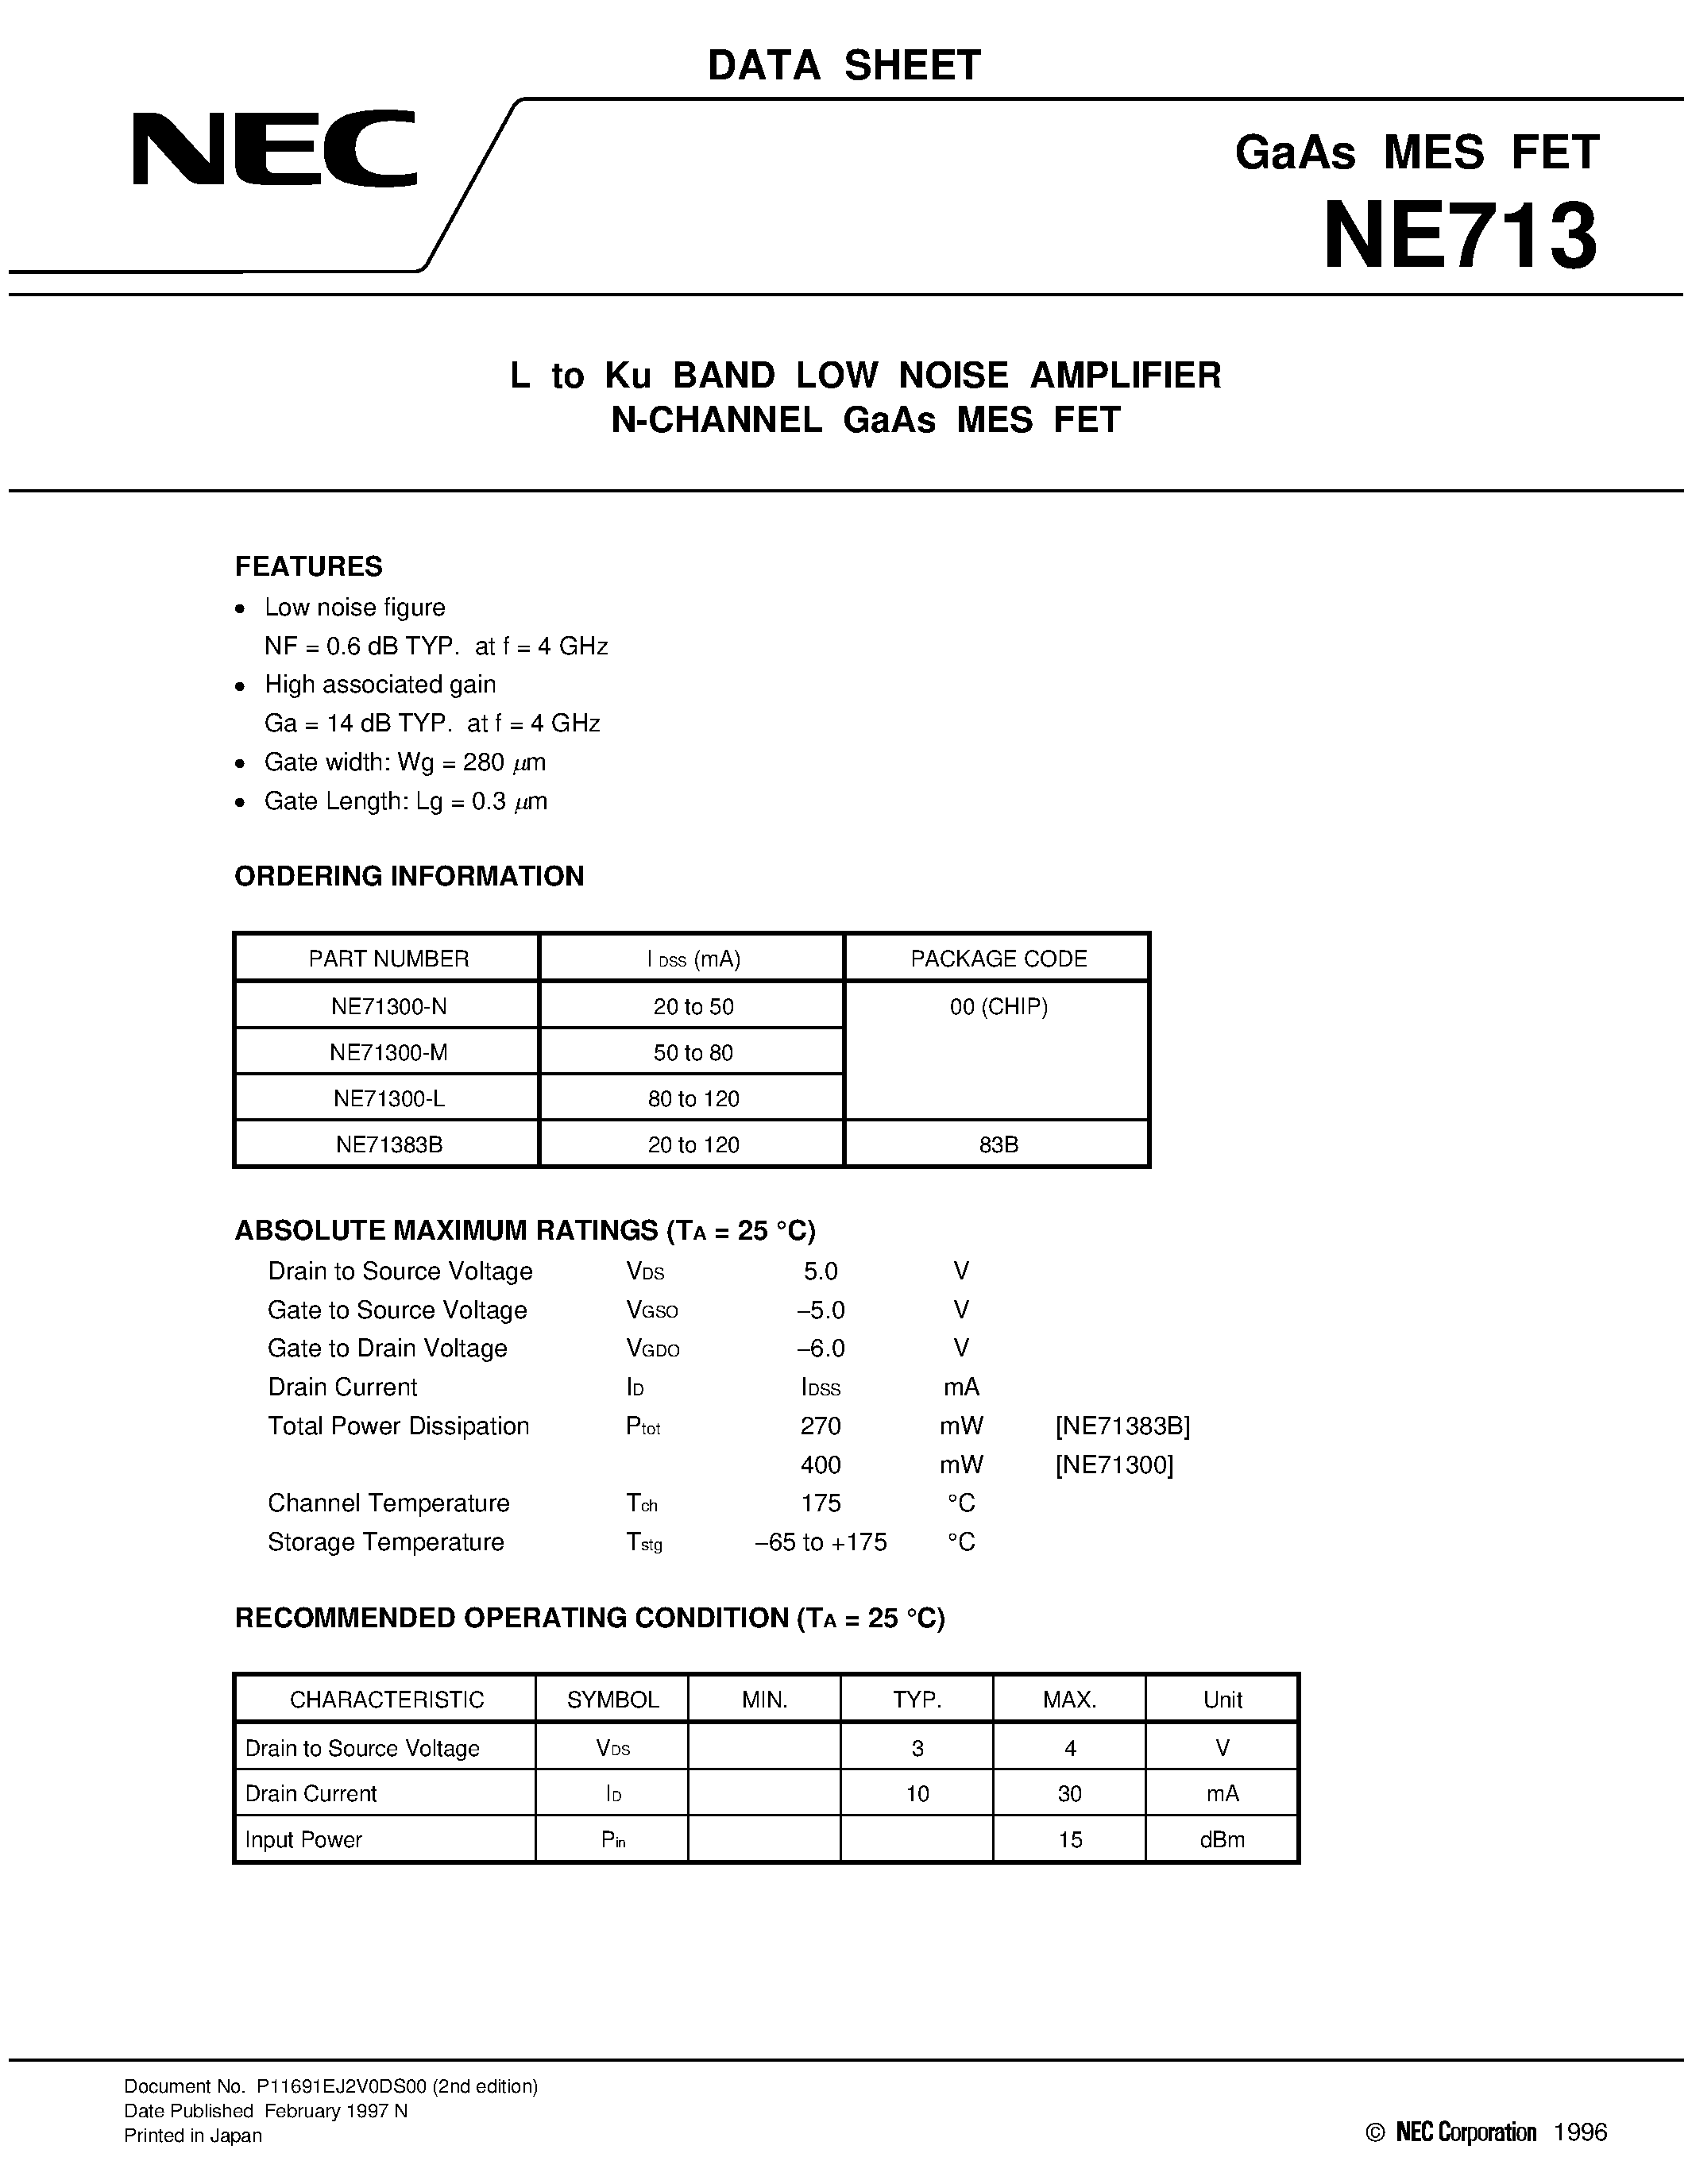 Datasheet NE71300-N - L to Ku BAND LOW NOISE AMPLIFIER N-CHANNEL GaAs MES FET page 1